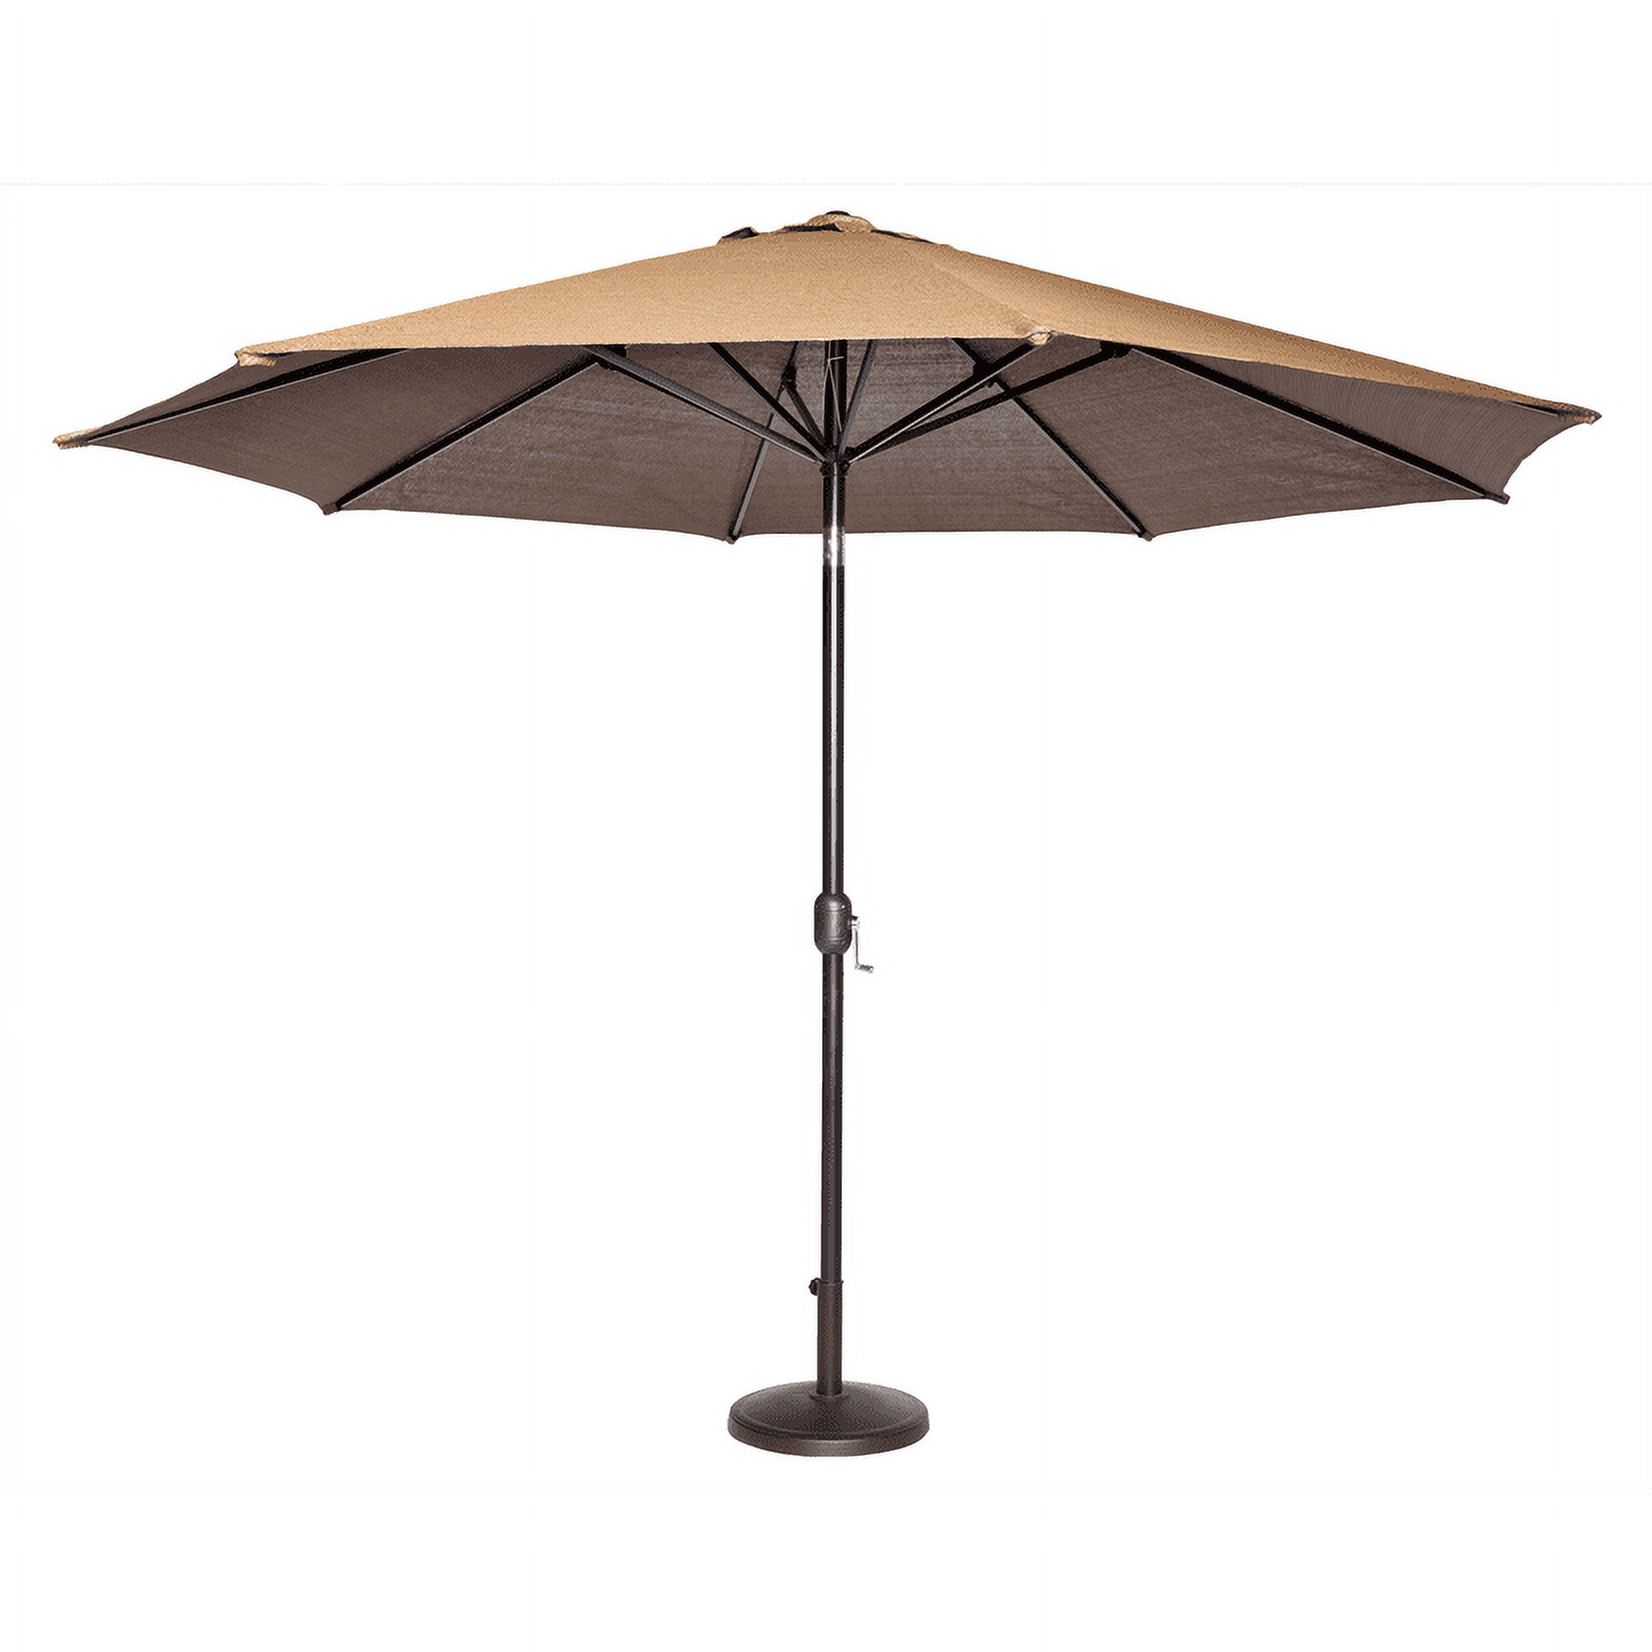 Coolaroo Round Market Patio Umbrella, 90% UV, 11', Mocha - image 2 of 5